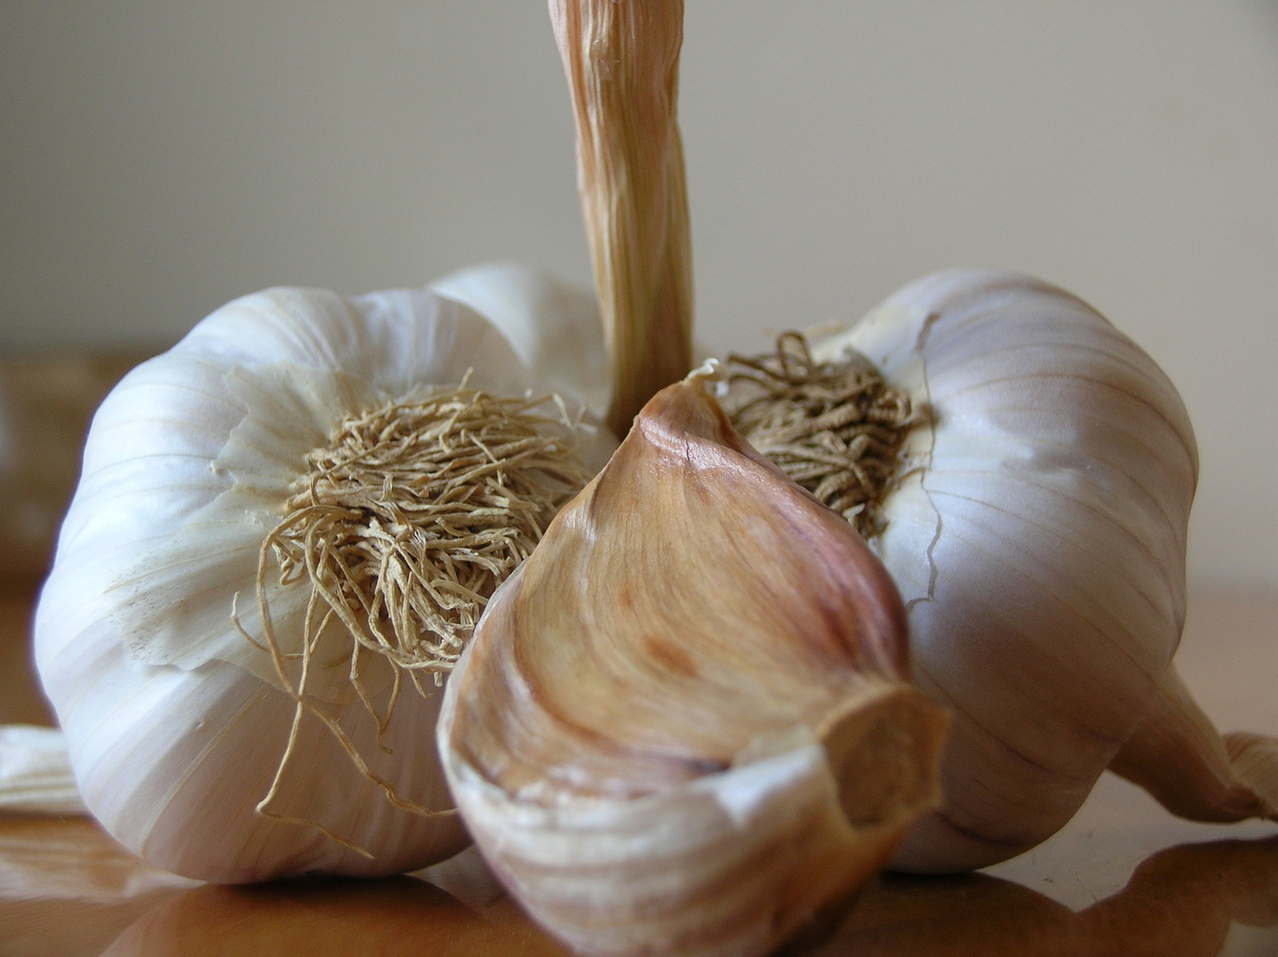 gilroy garlic festival 2016 image